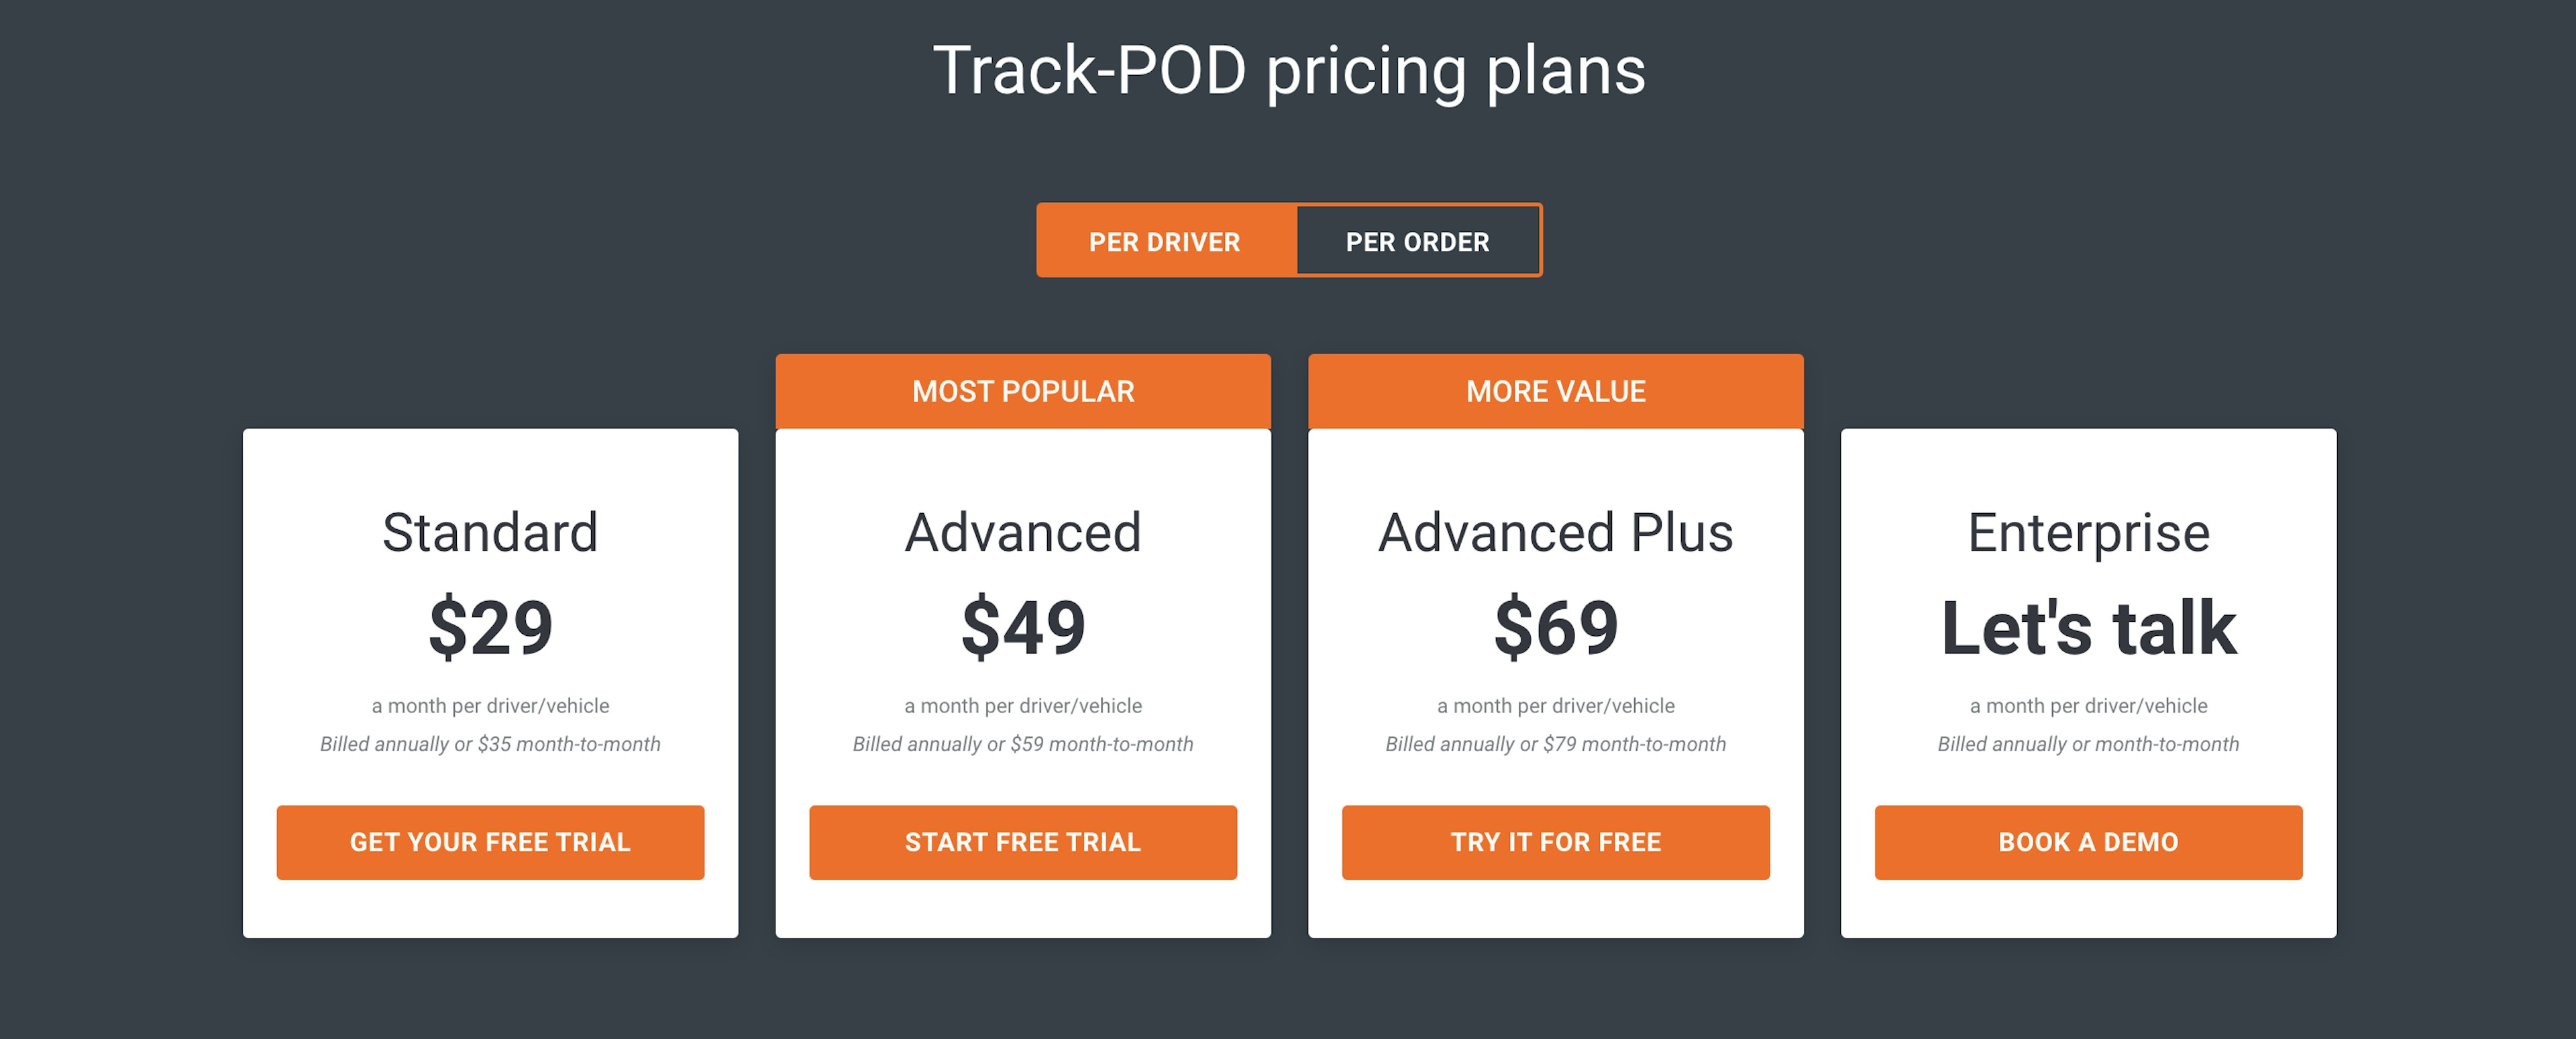 Track-POD pricing